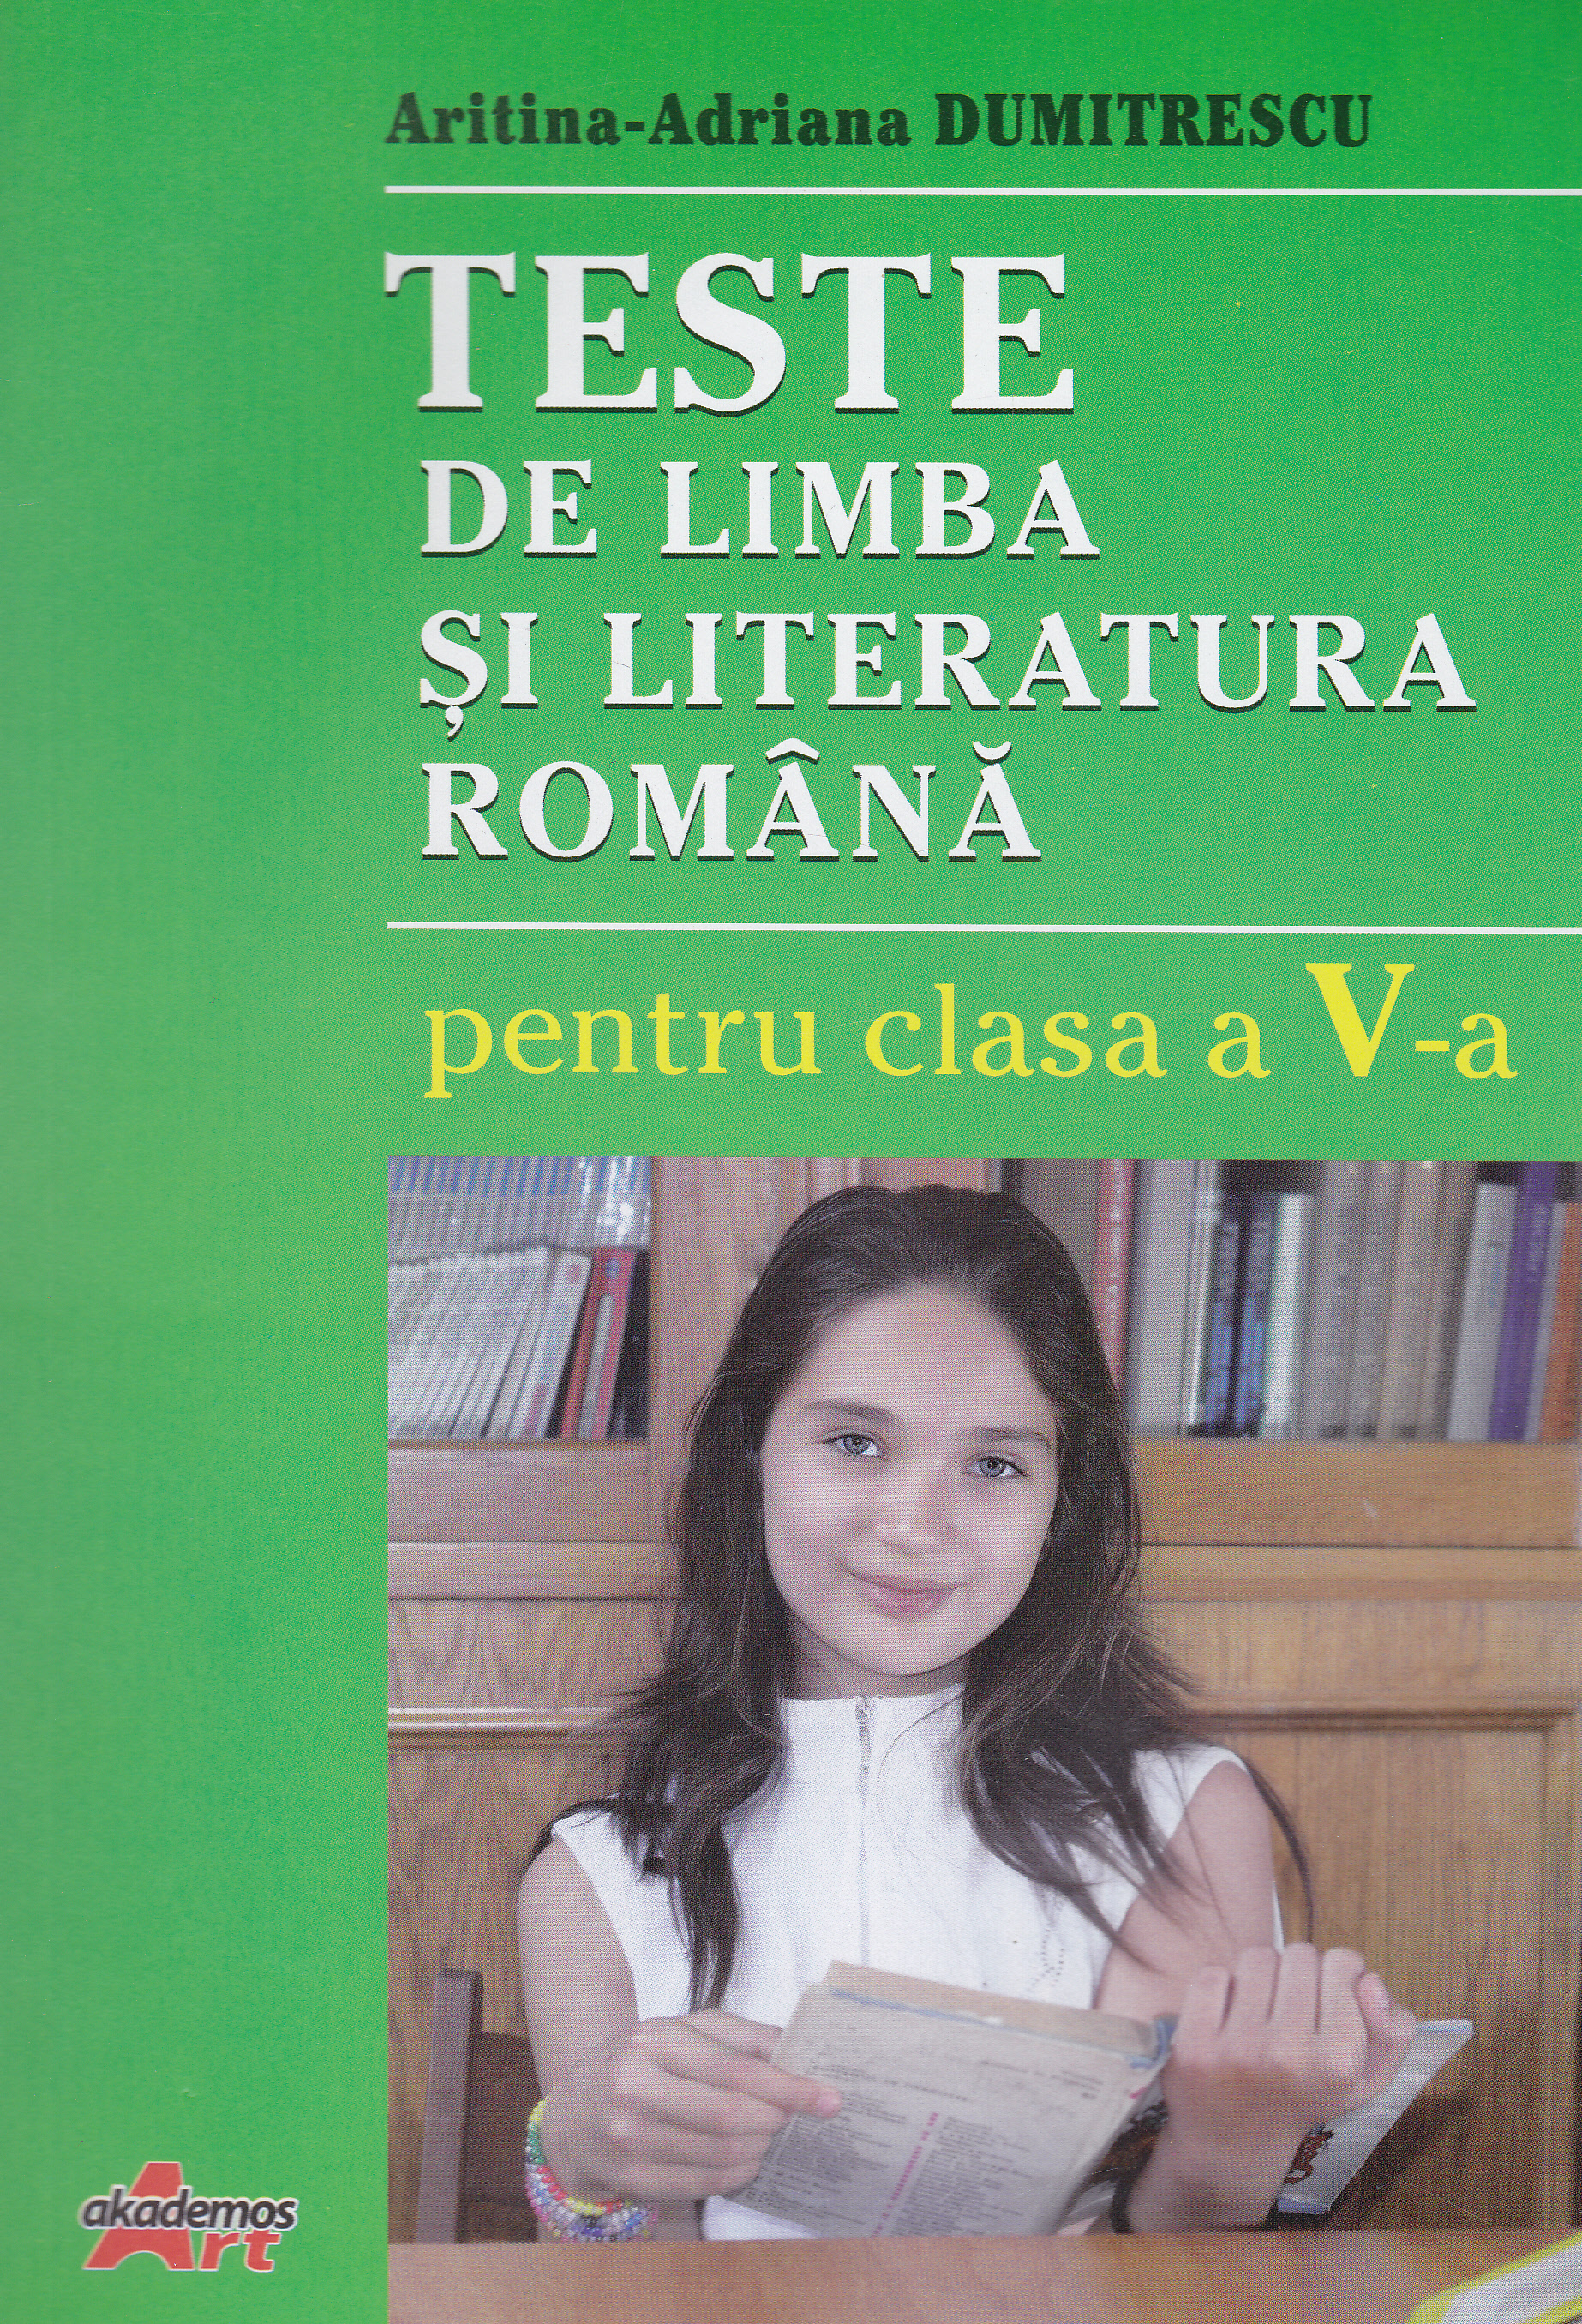 Teste de limba si literatura romana cls 5 - Aritina-Adriana Dumitrescu